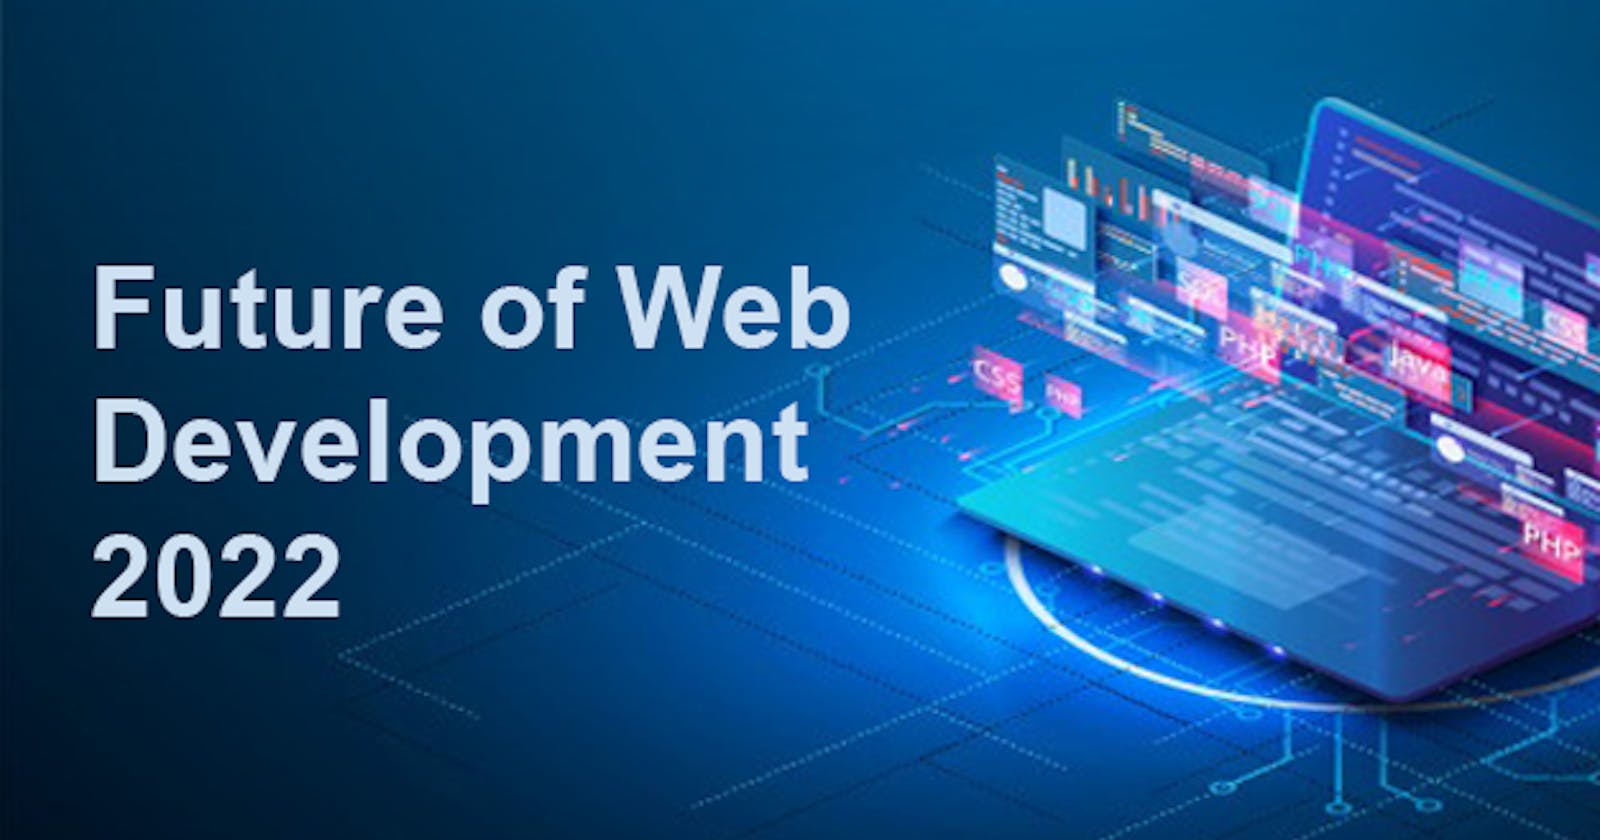 Future of Web Development 2022: Top 10 Technologies